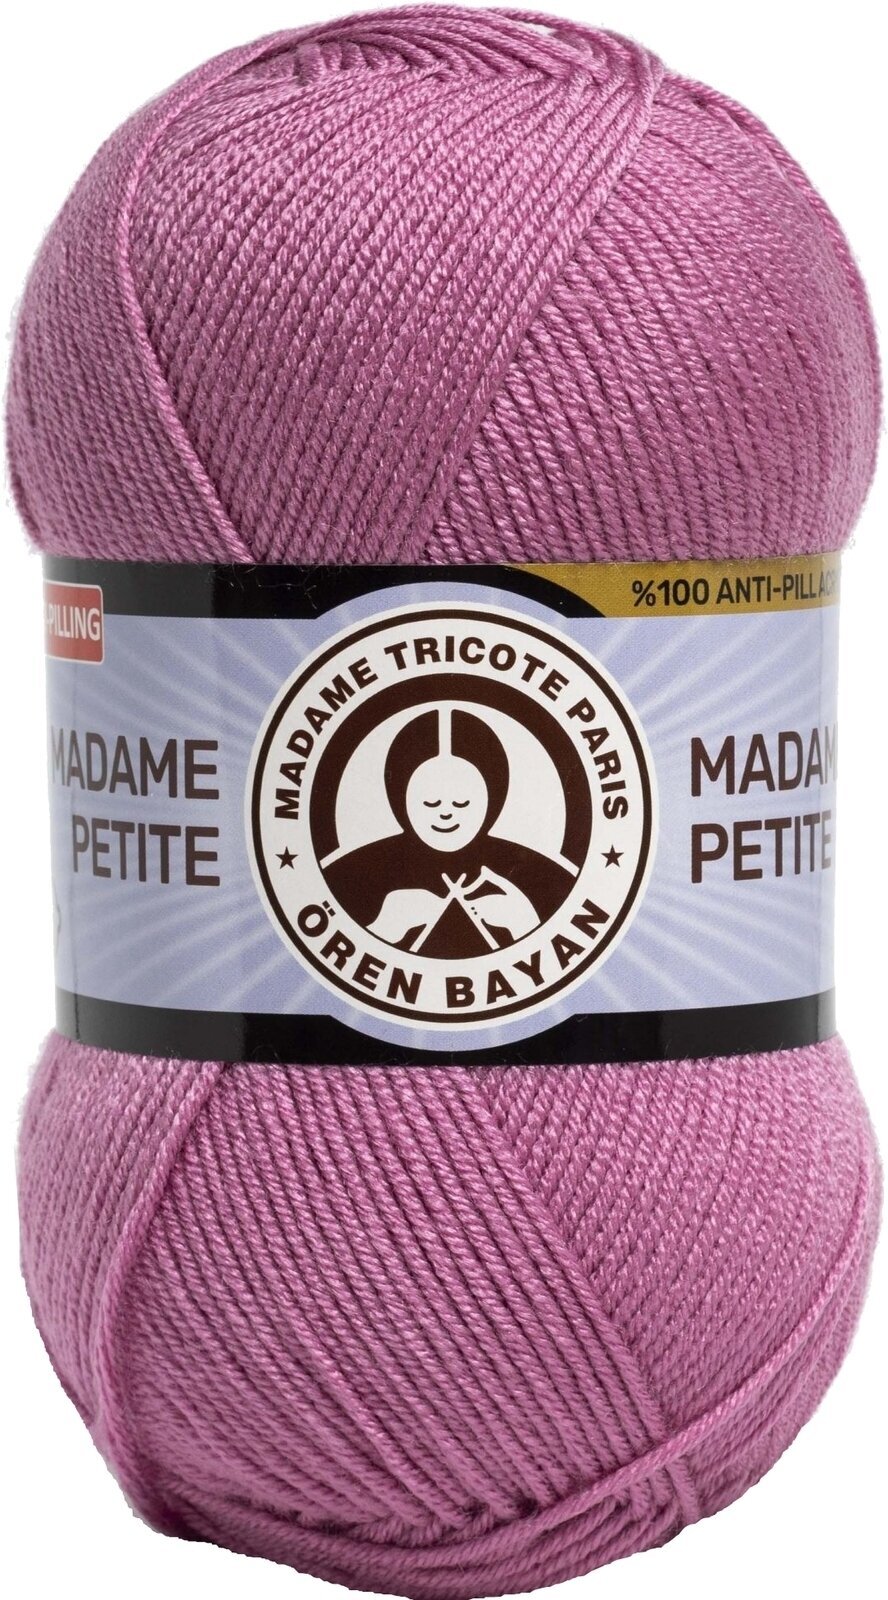 Strikkegarn Madame Tricote Paris Madame Petite 3848 49 Strikkegarn